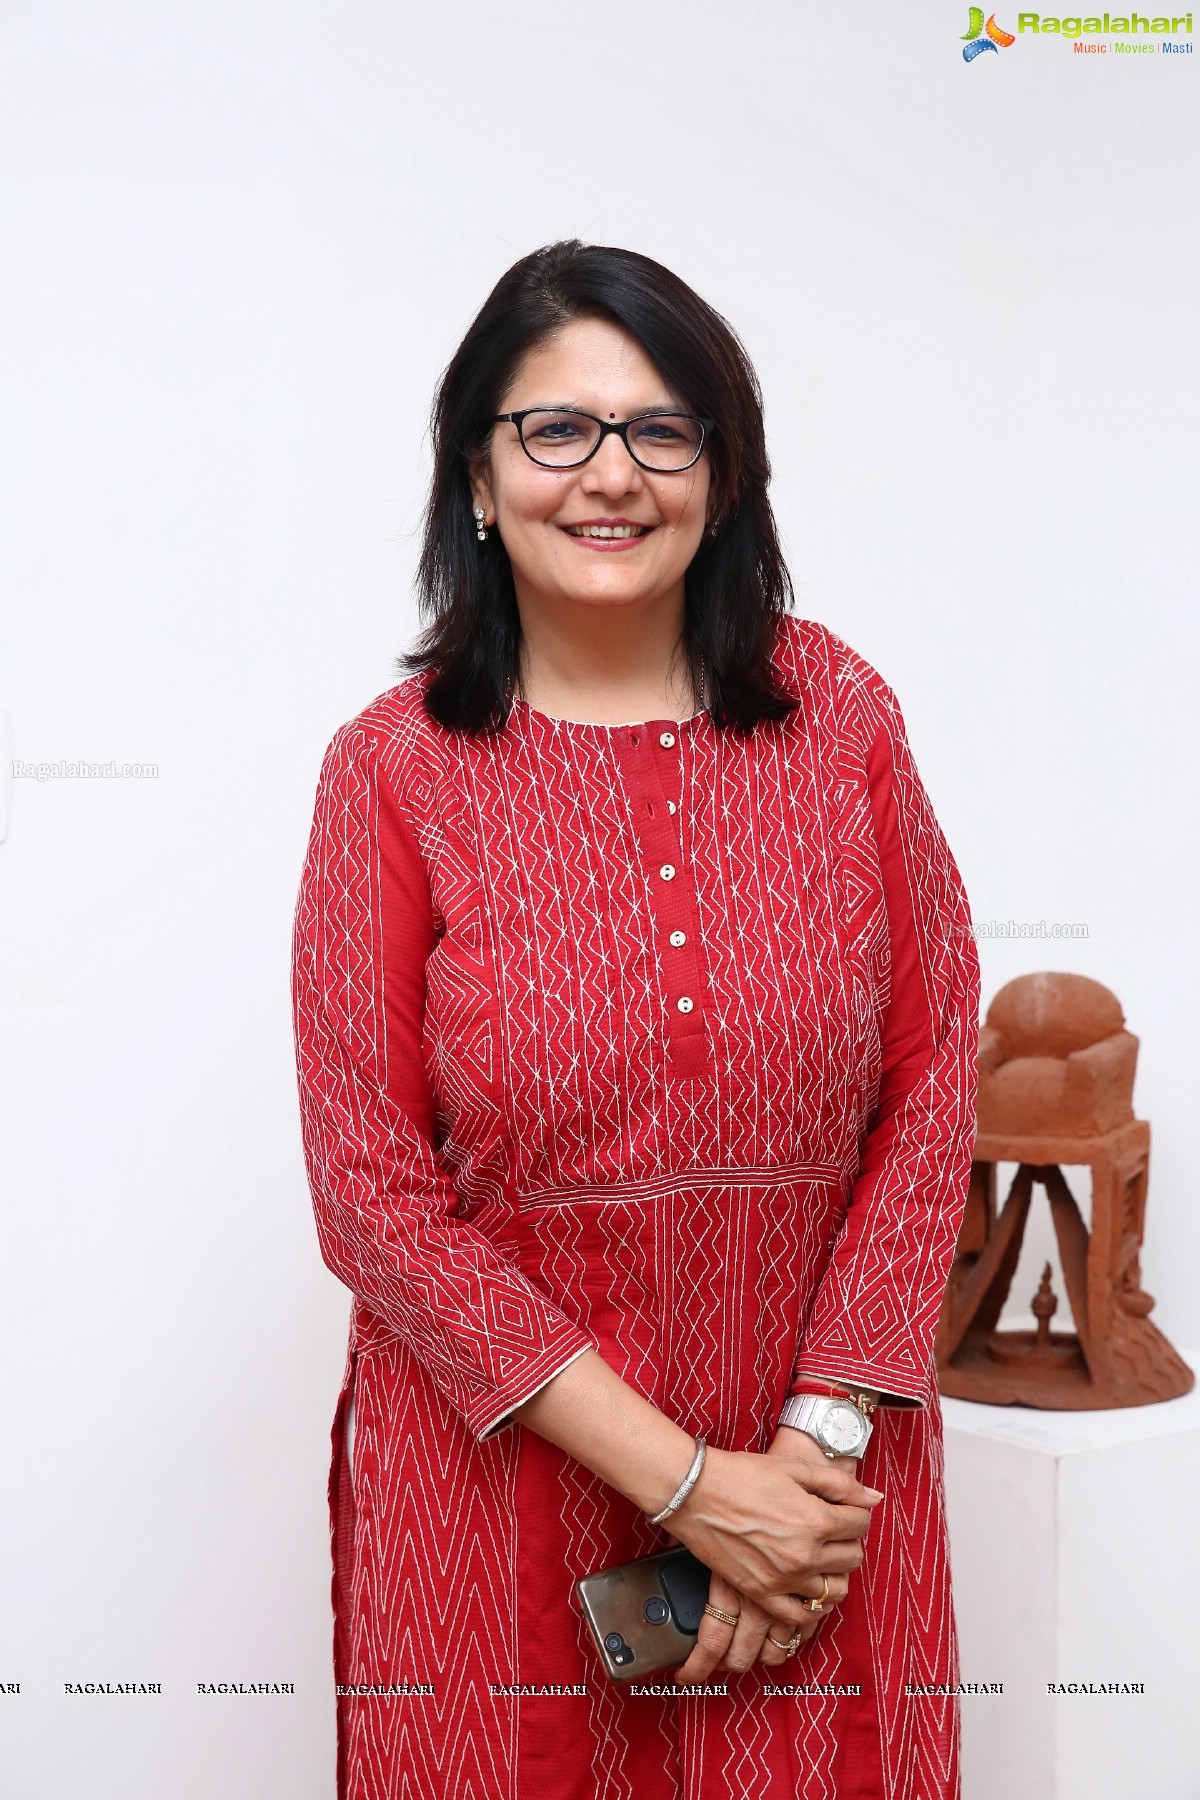 Kalakriti Art Gallery - Ms Sathya Saran in Conversation with Ms Aparajita Sinha